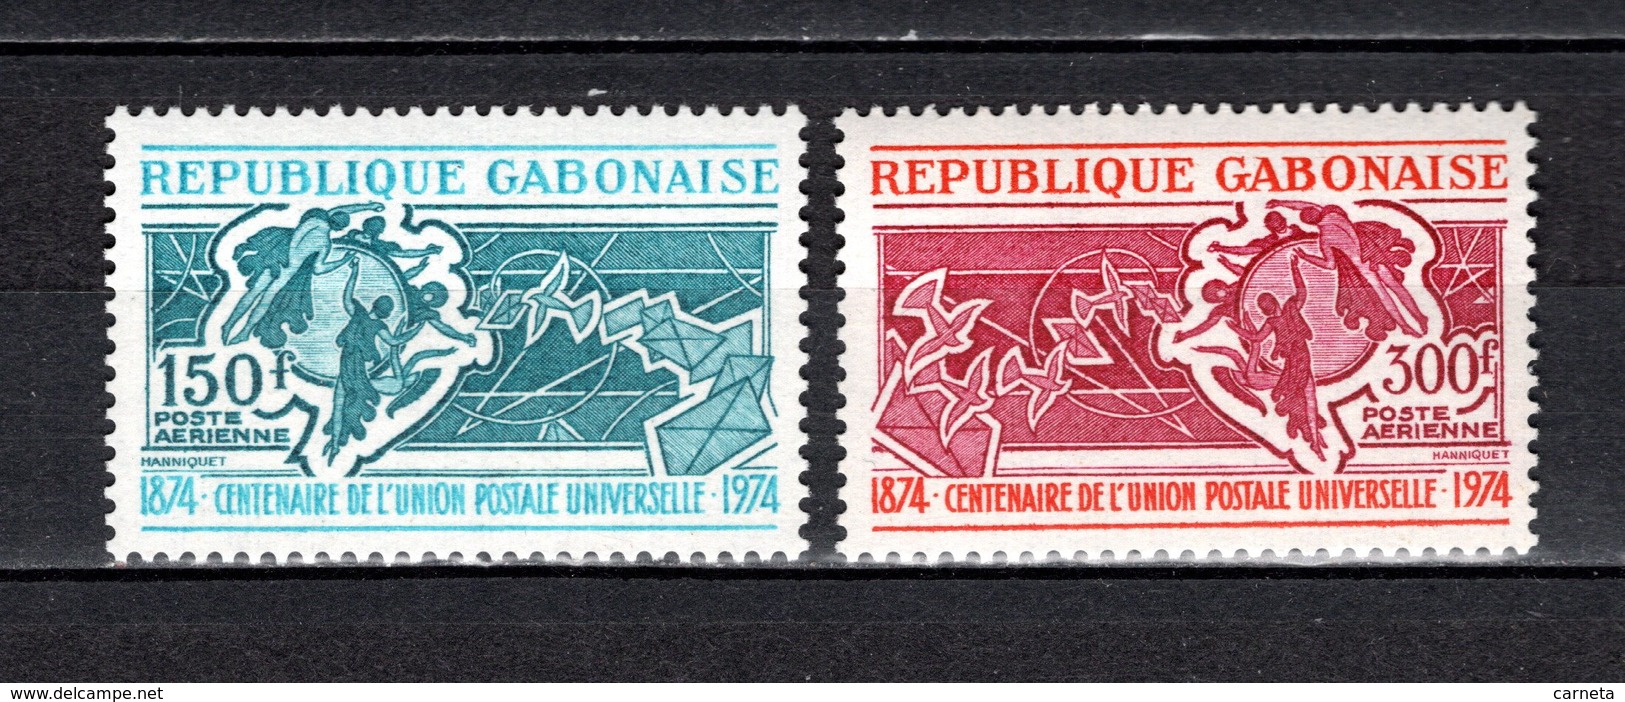 GABON PA N° 150 + 151  NEUFS SANS CHARNIERE COTE 8.00€  UPU - Gabon (1960-...)